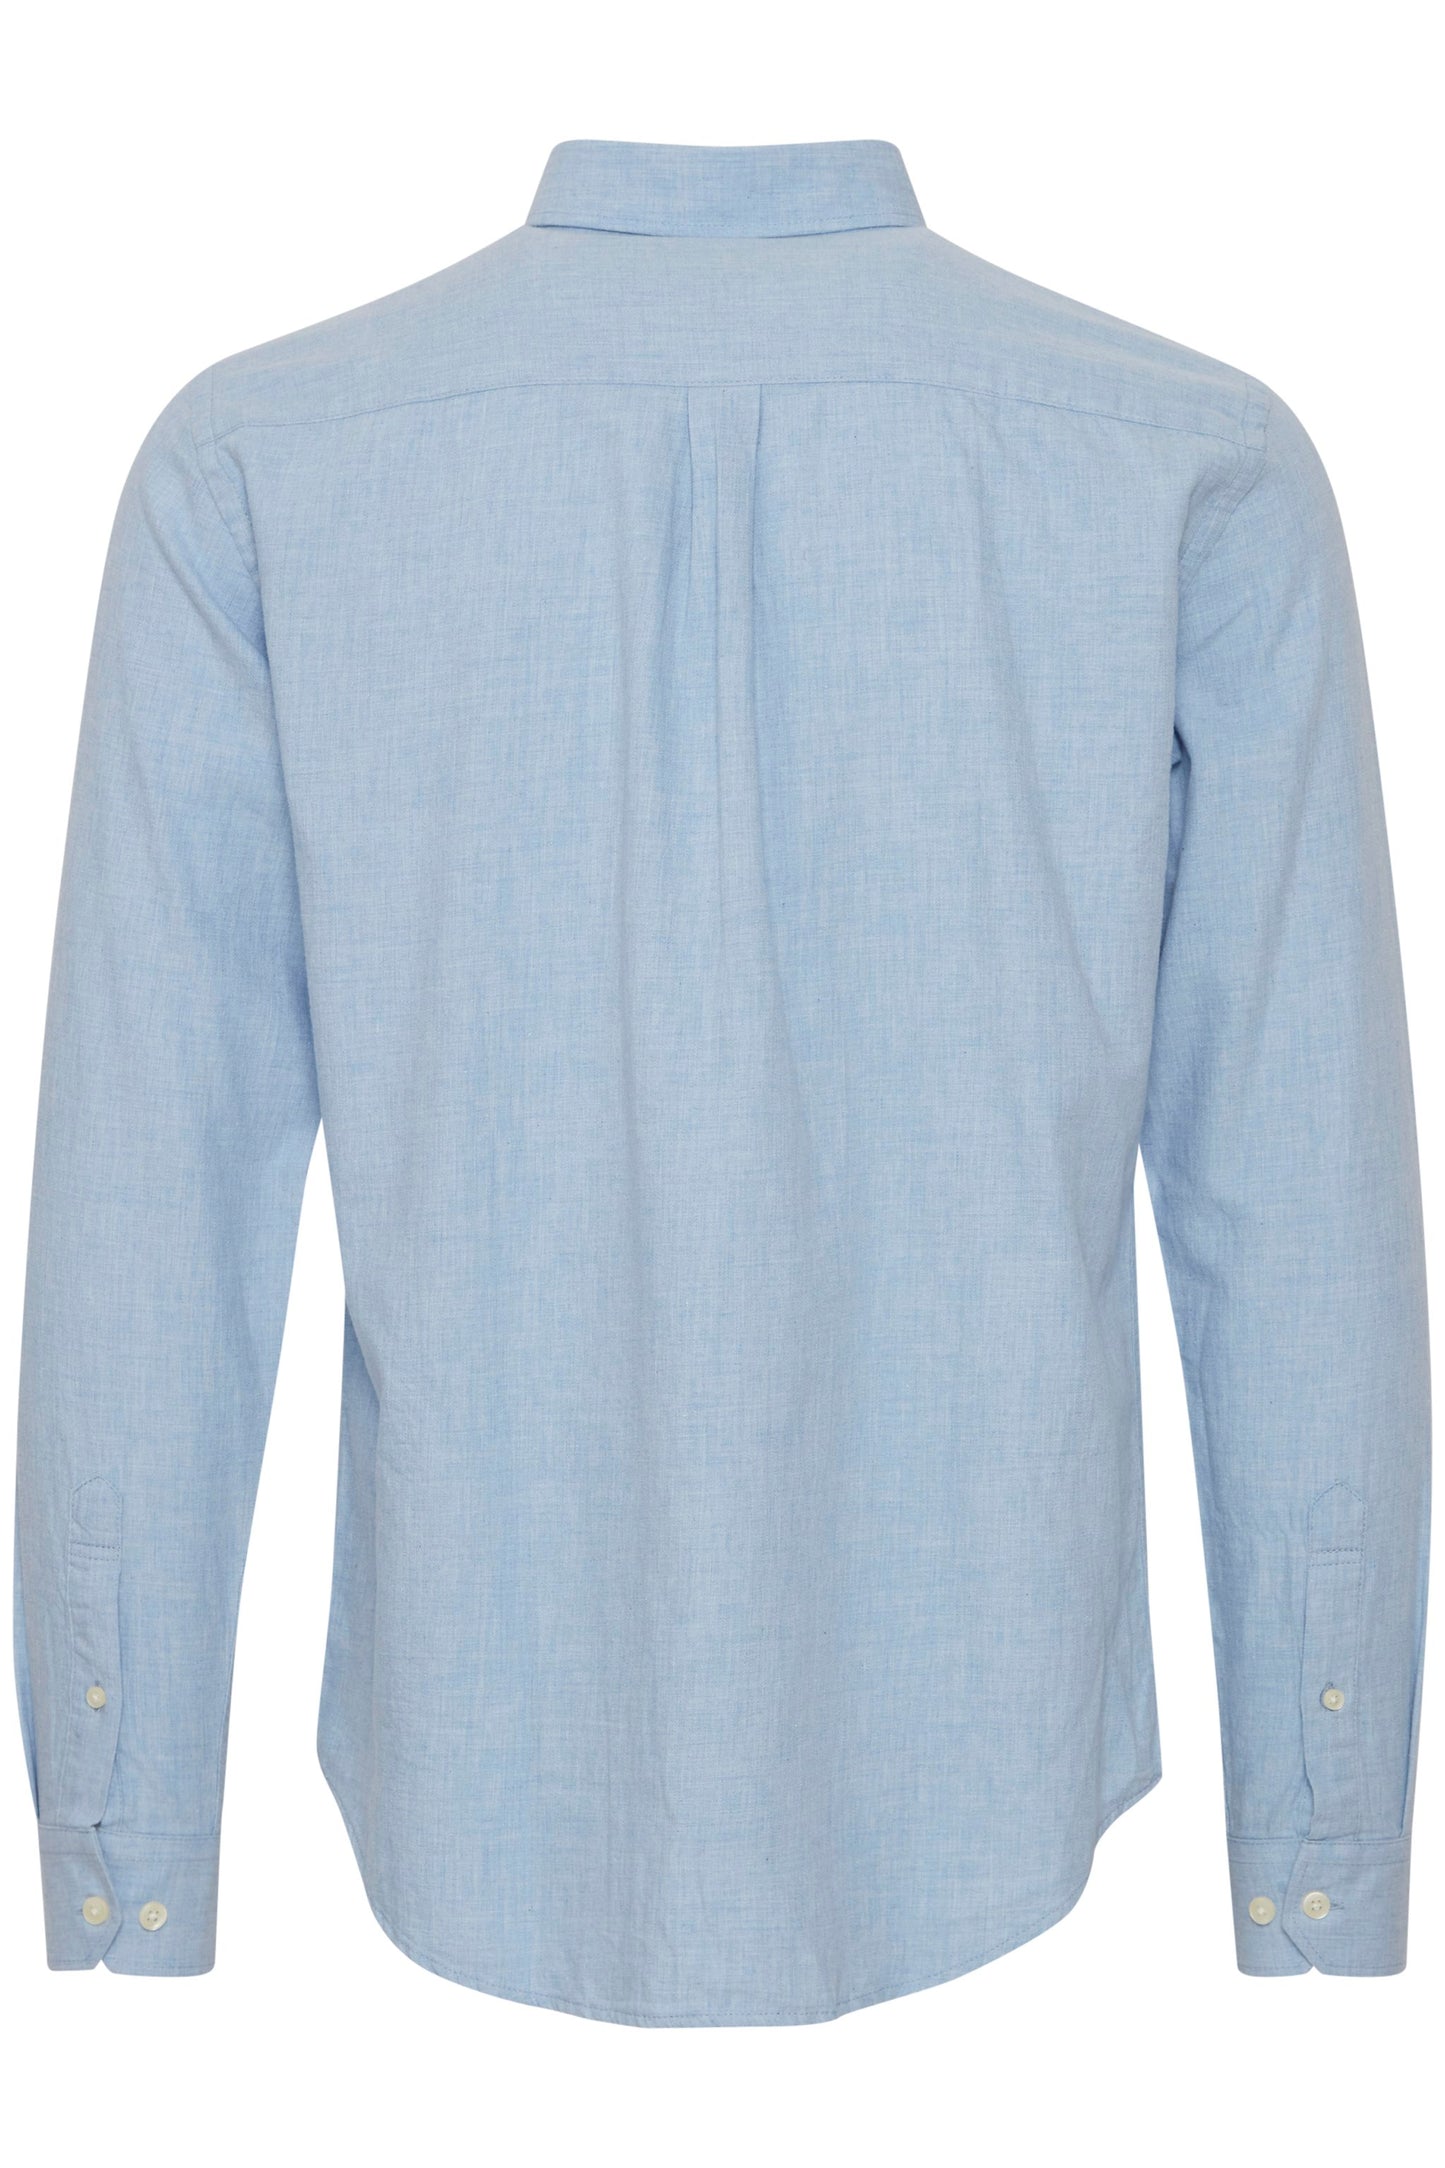 Pure-Cotton Long Sleeve Shirt - Sky Blue